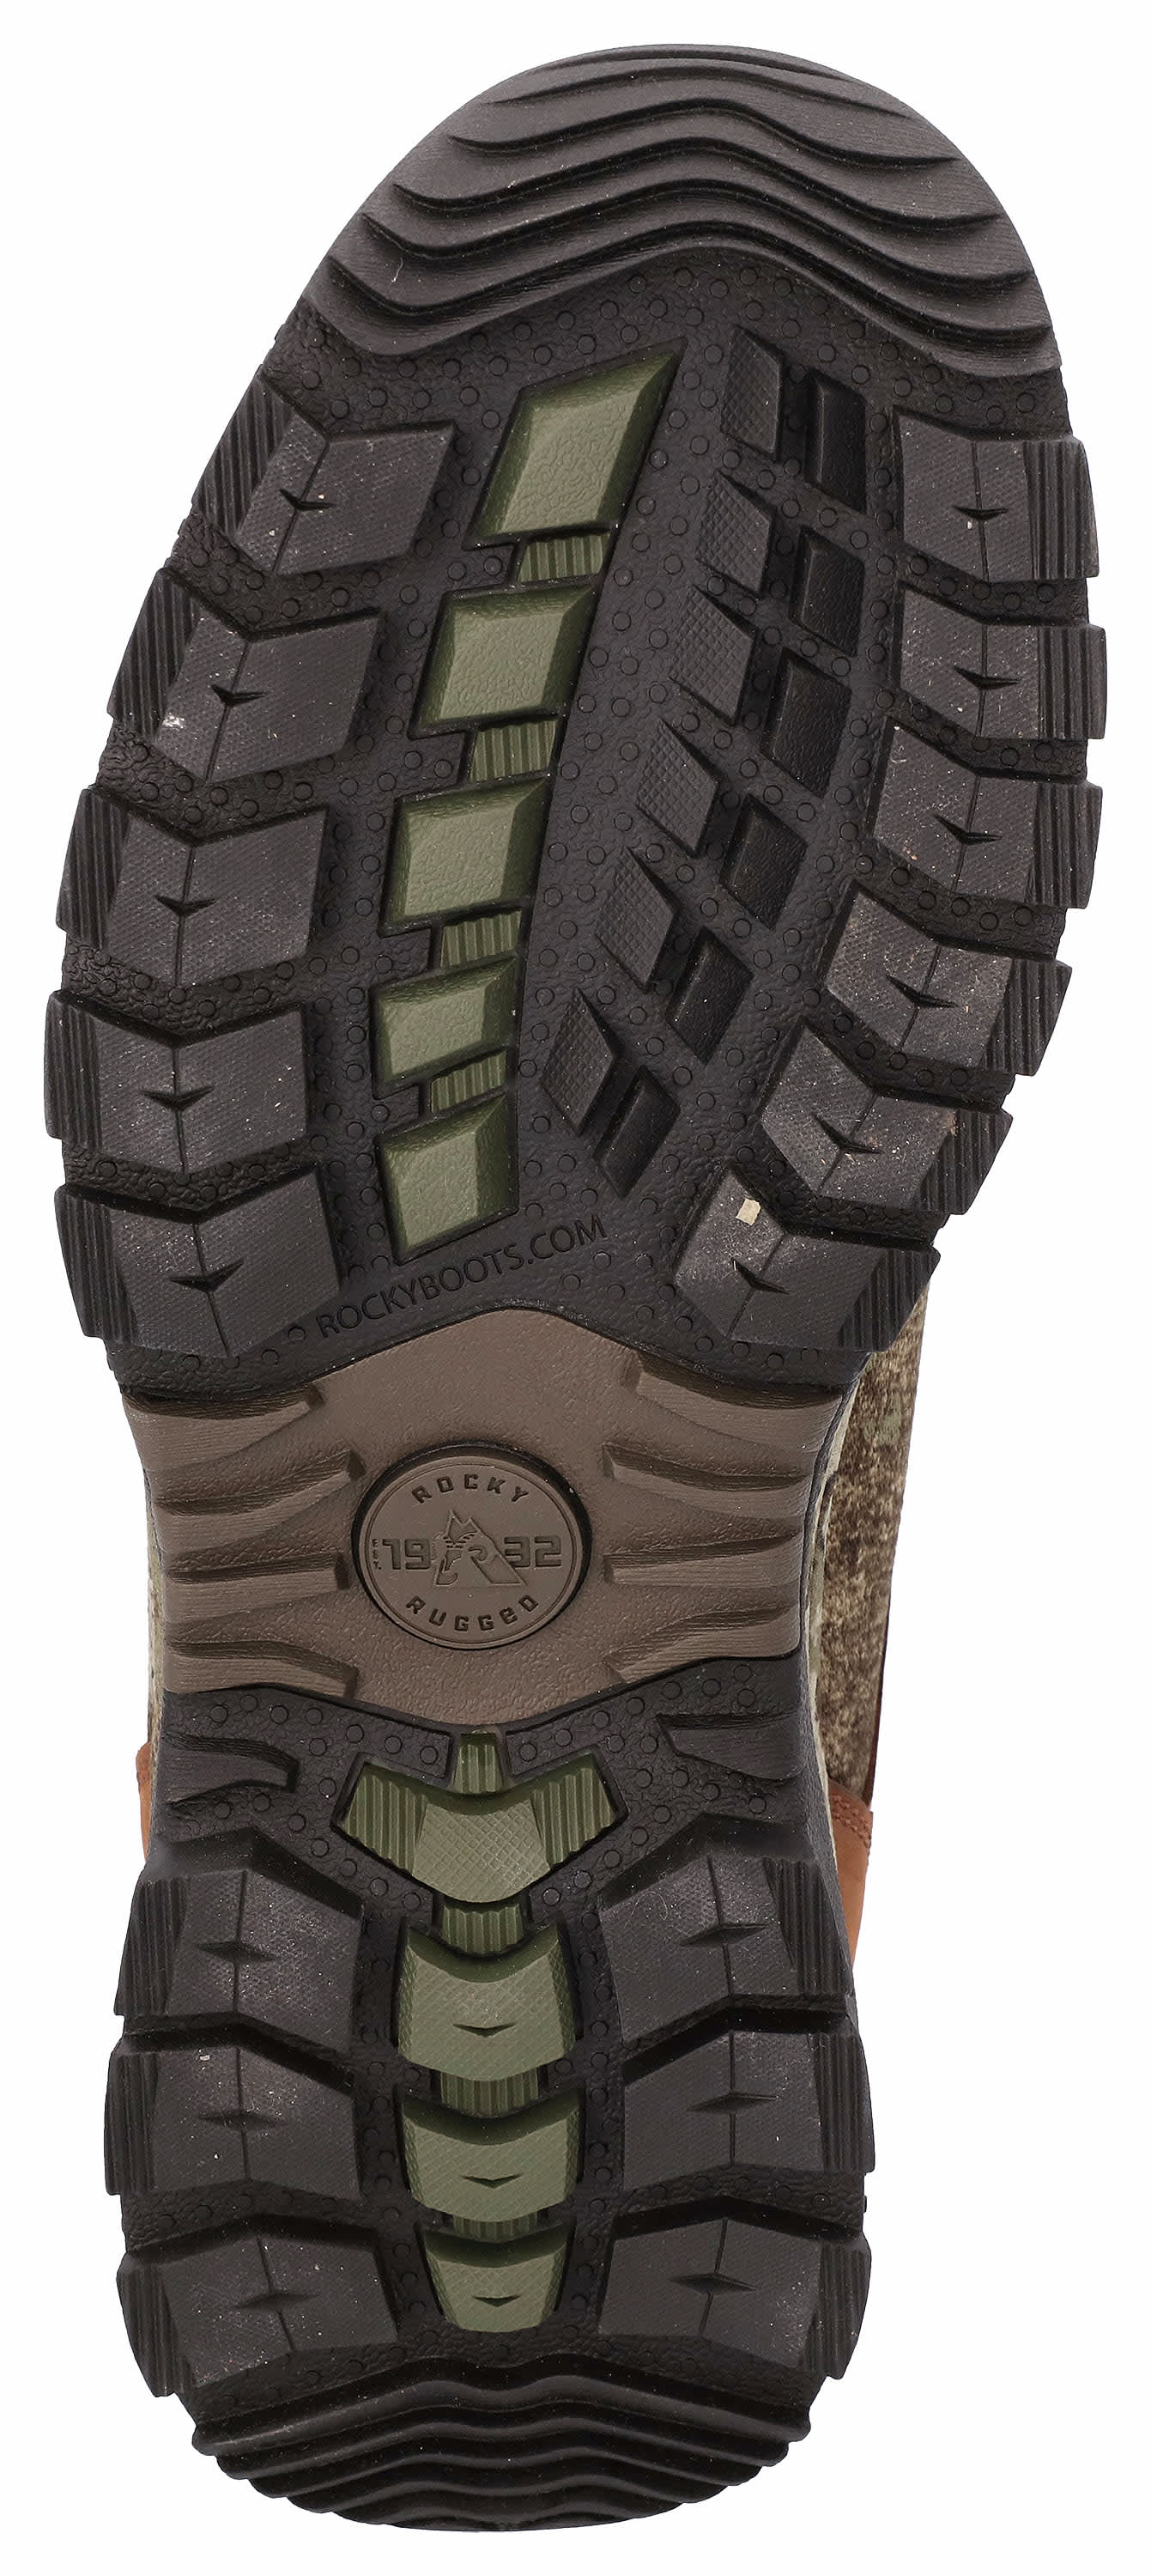 ROCKY® Lynx TrueTimber Insulated Waterproof Hunting Boots for Men